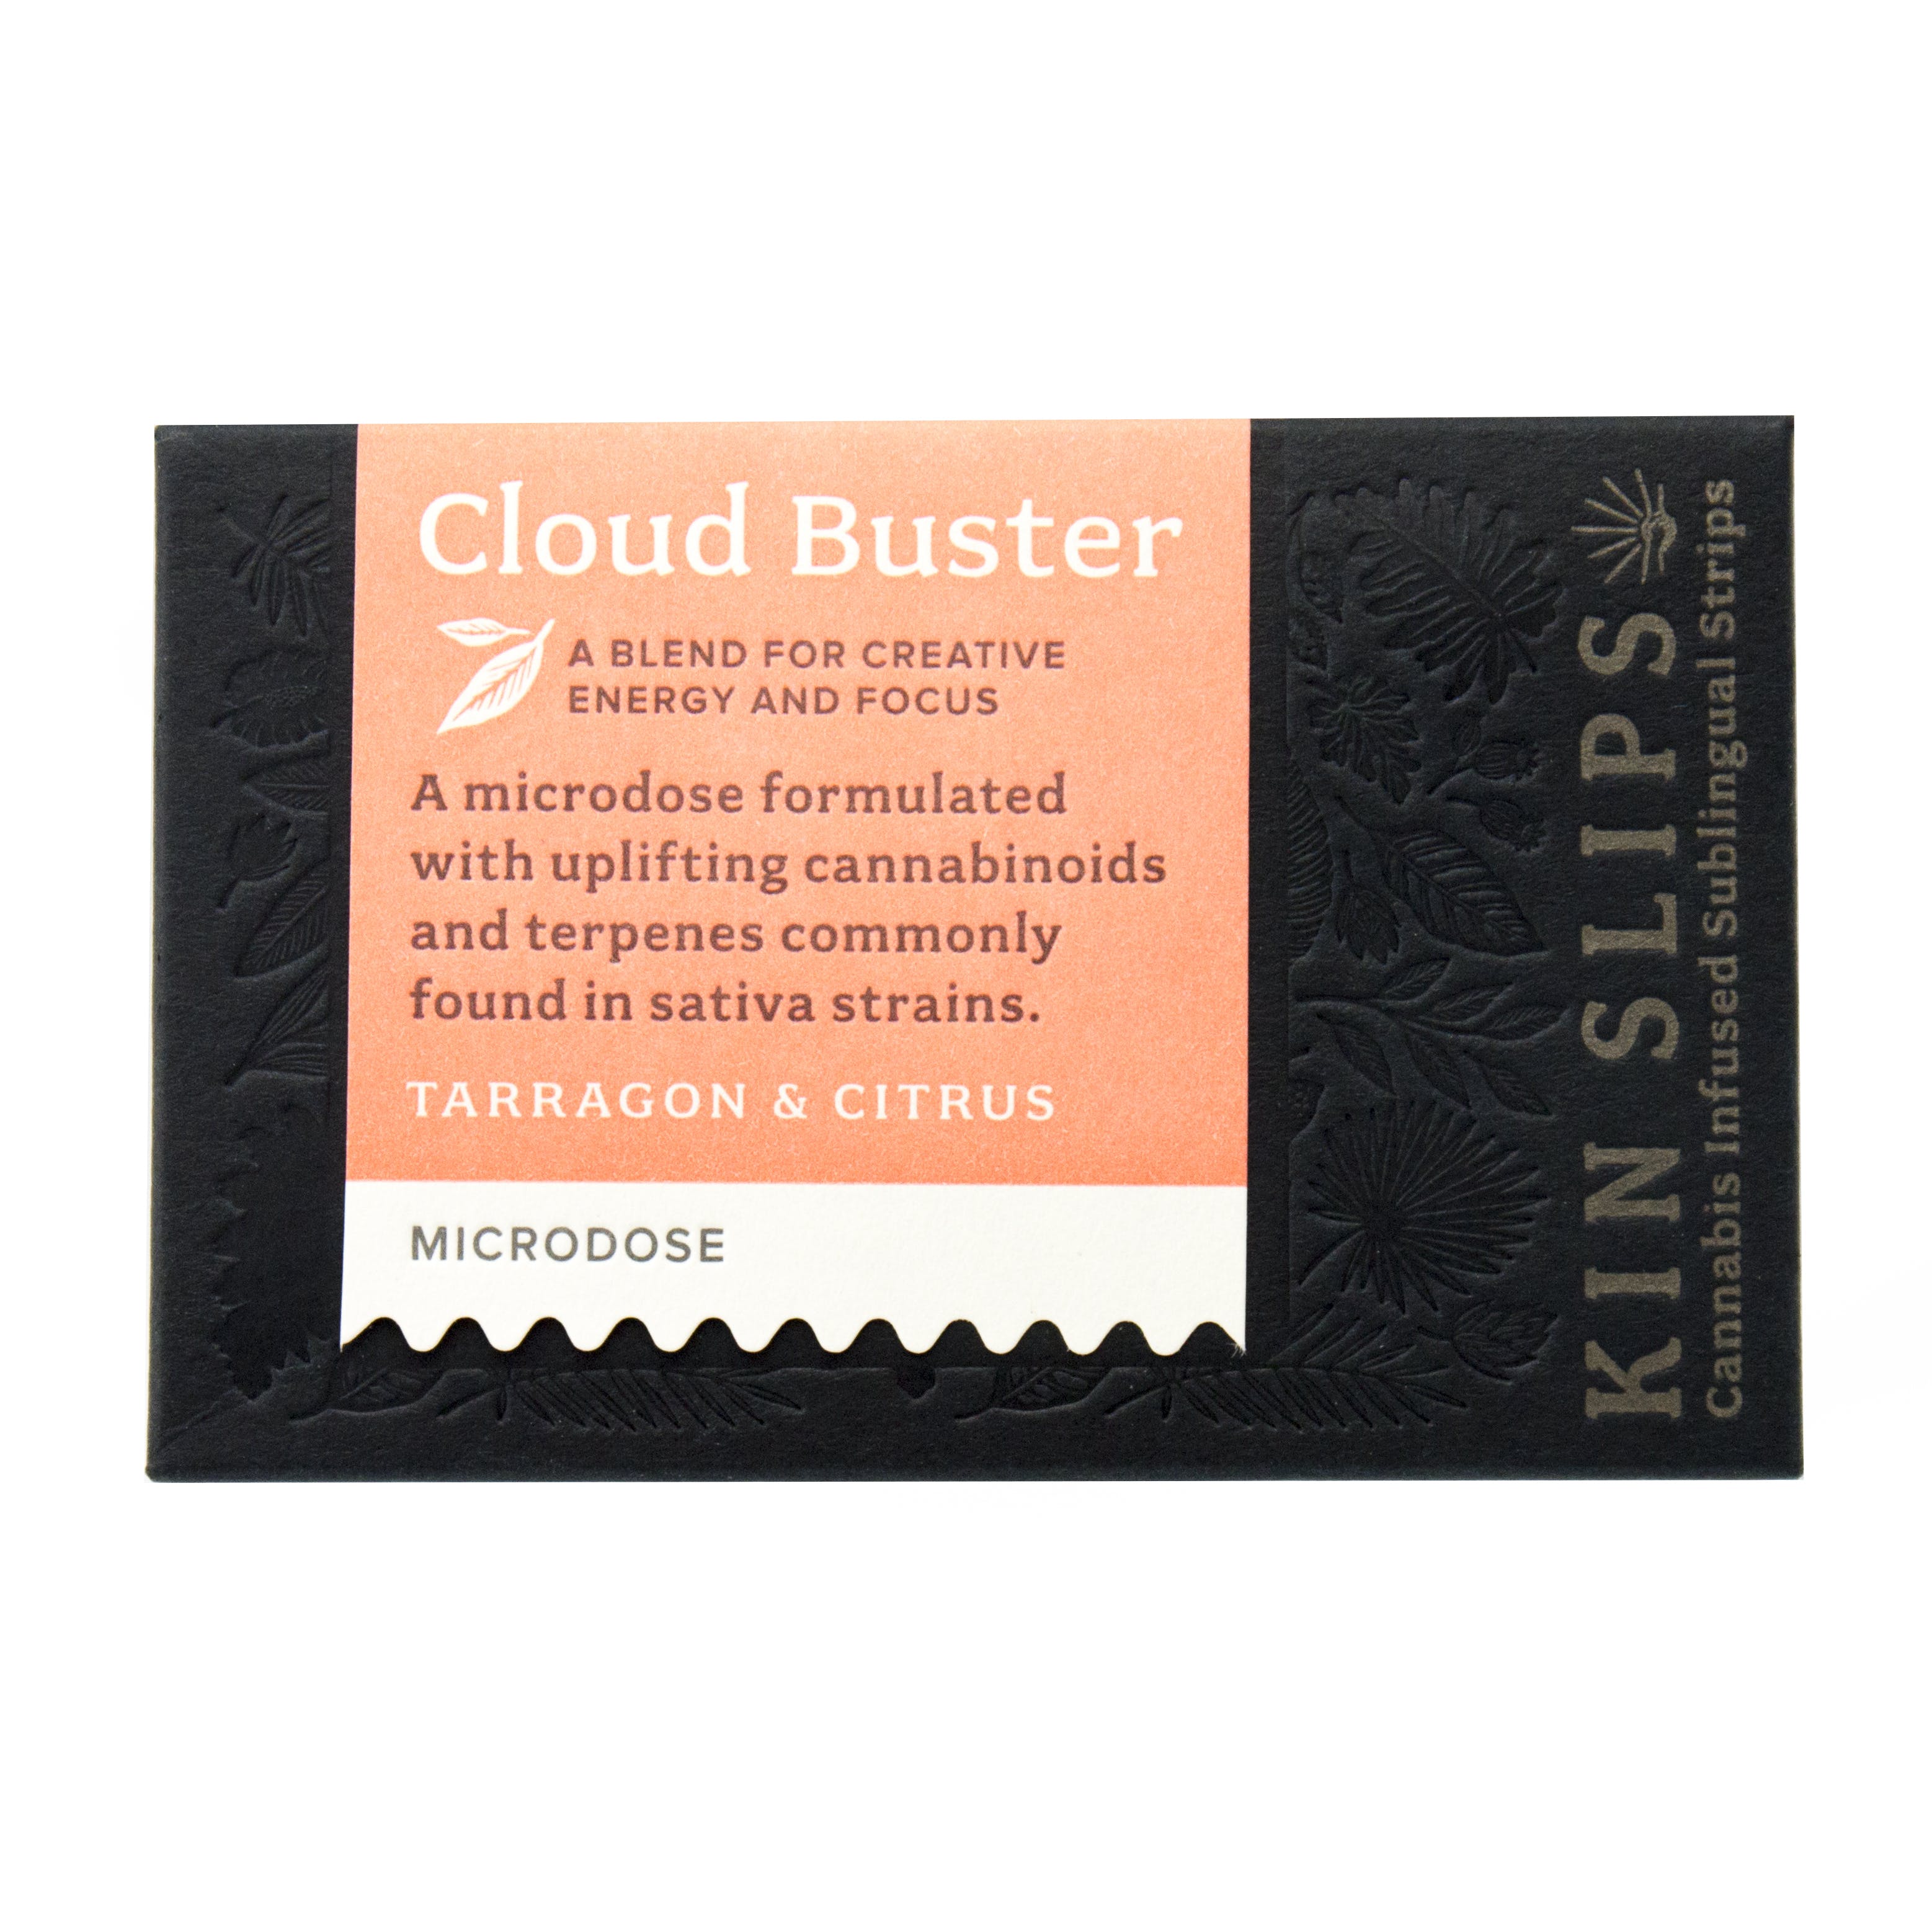 Kin Slips - Cloud Buster - 5mg Sublingual Strip